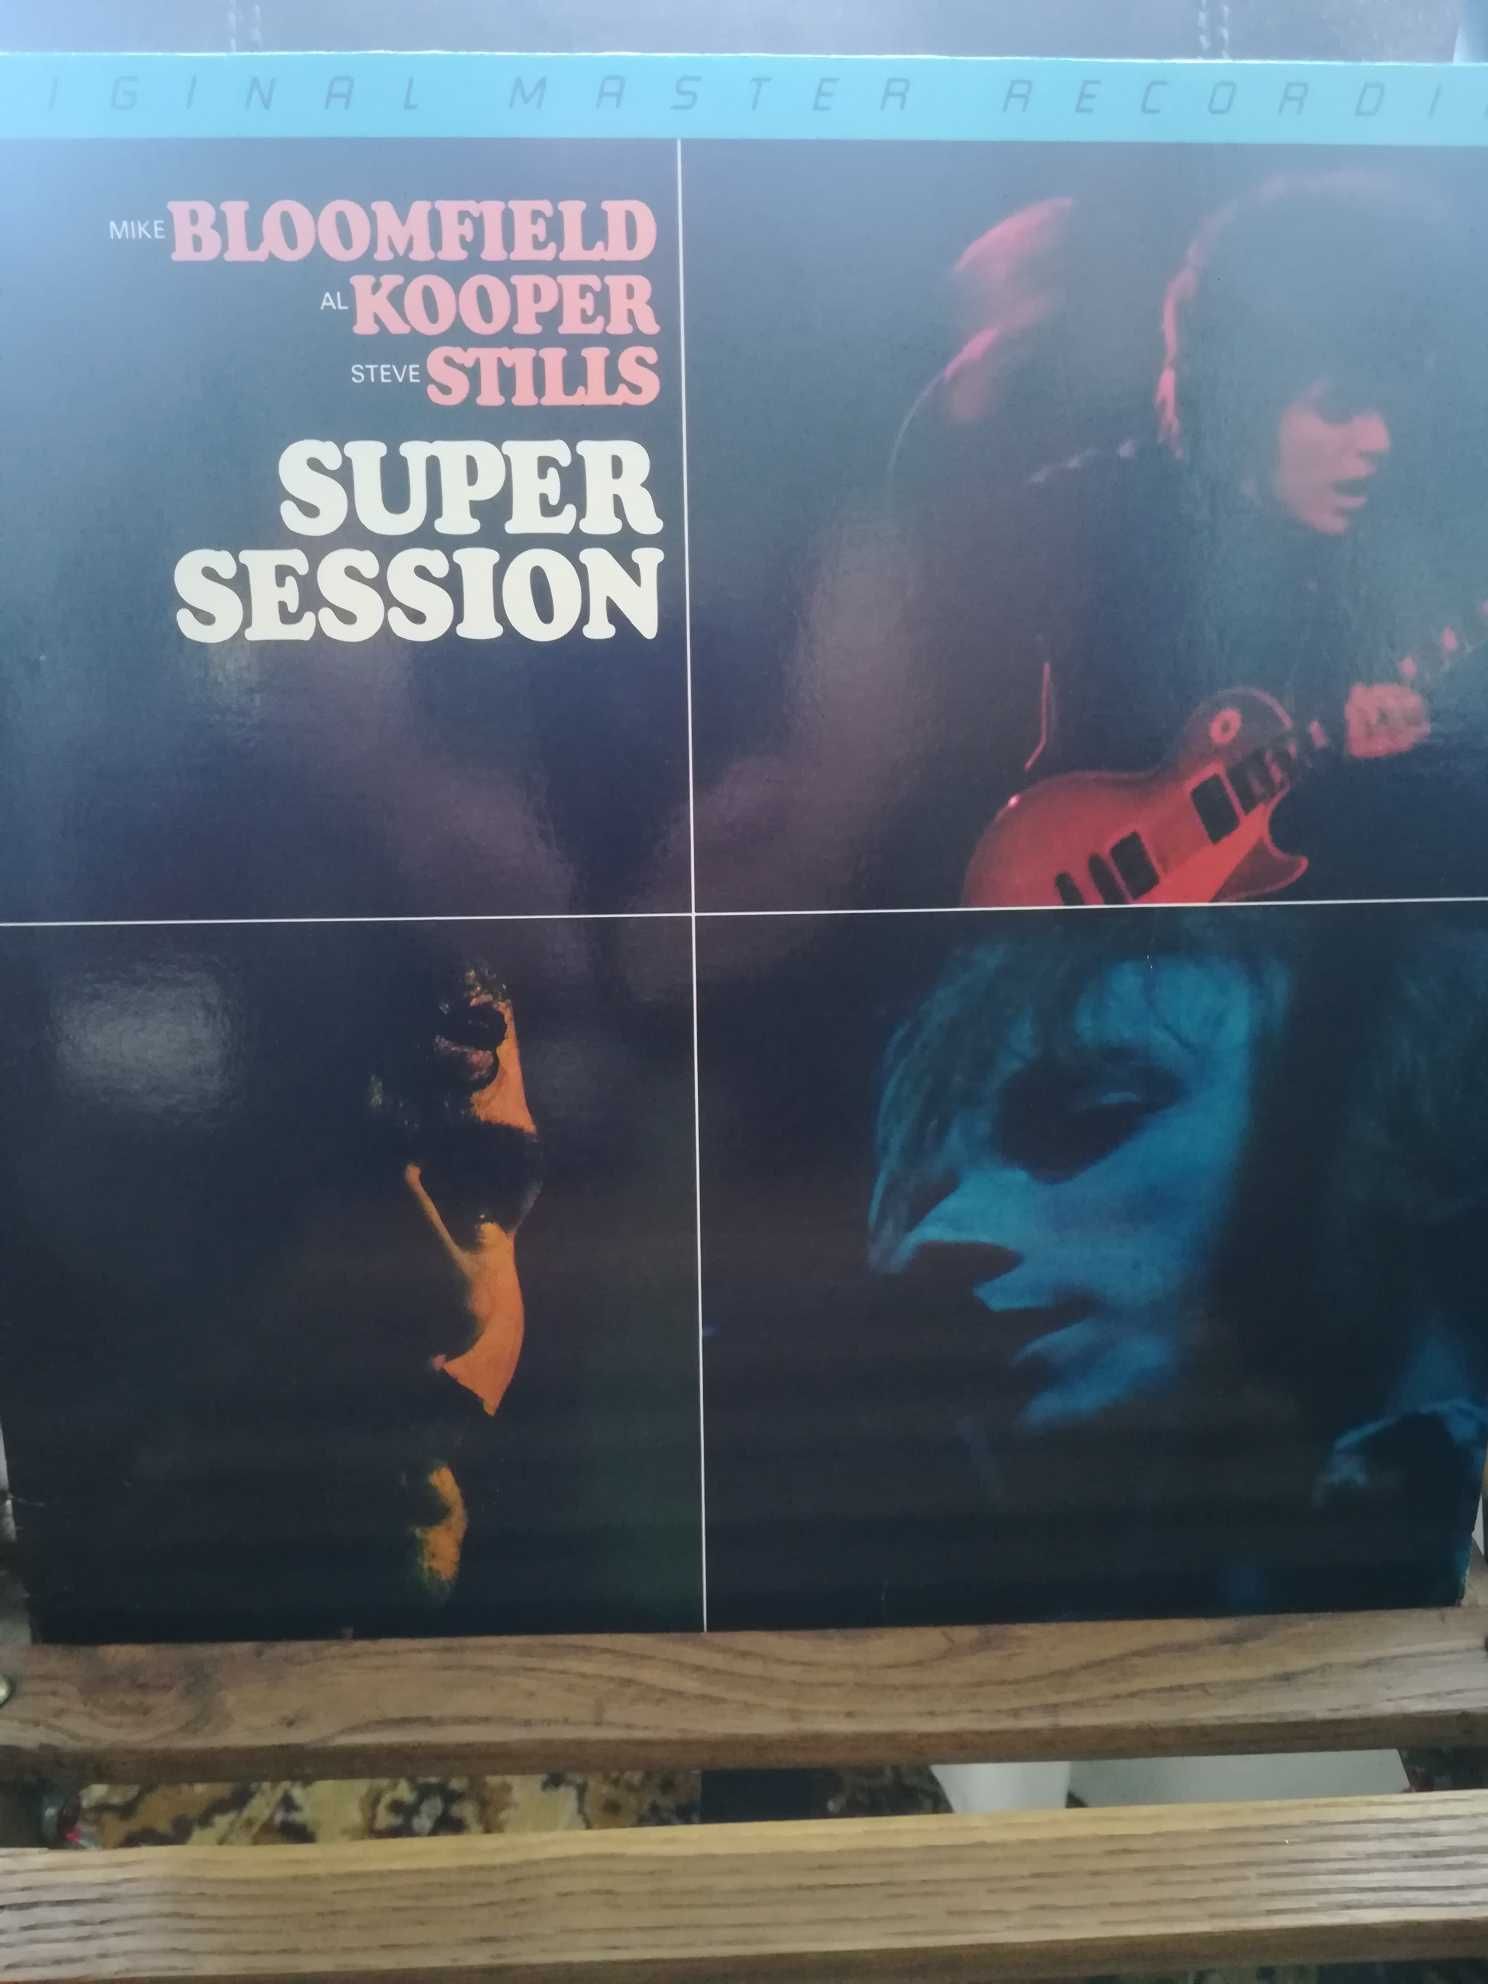 Mike Bloomfield / Al Kooper / Stephen Stills – Super Session